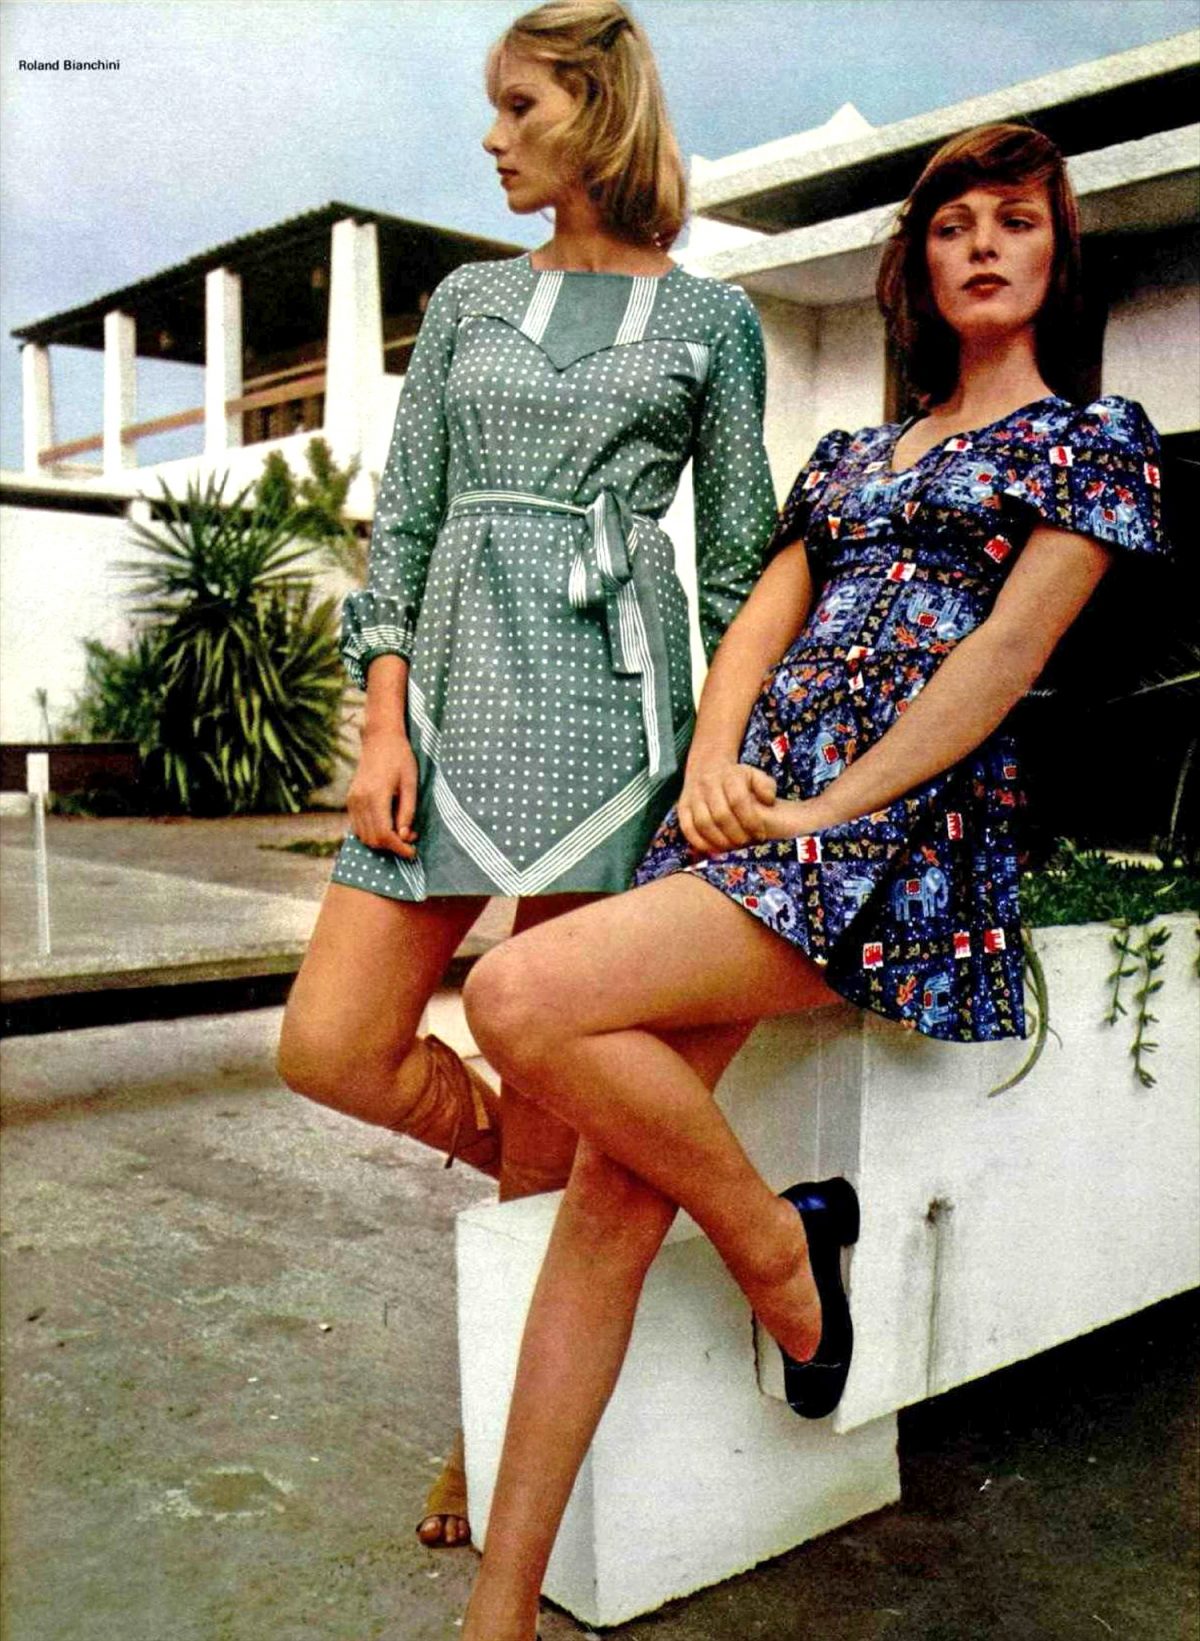 Women Teen Fashions 1972 Defining The Seventies Style Flashbak